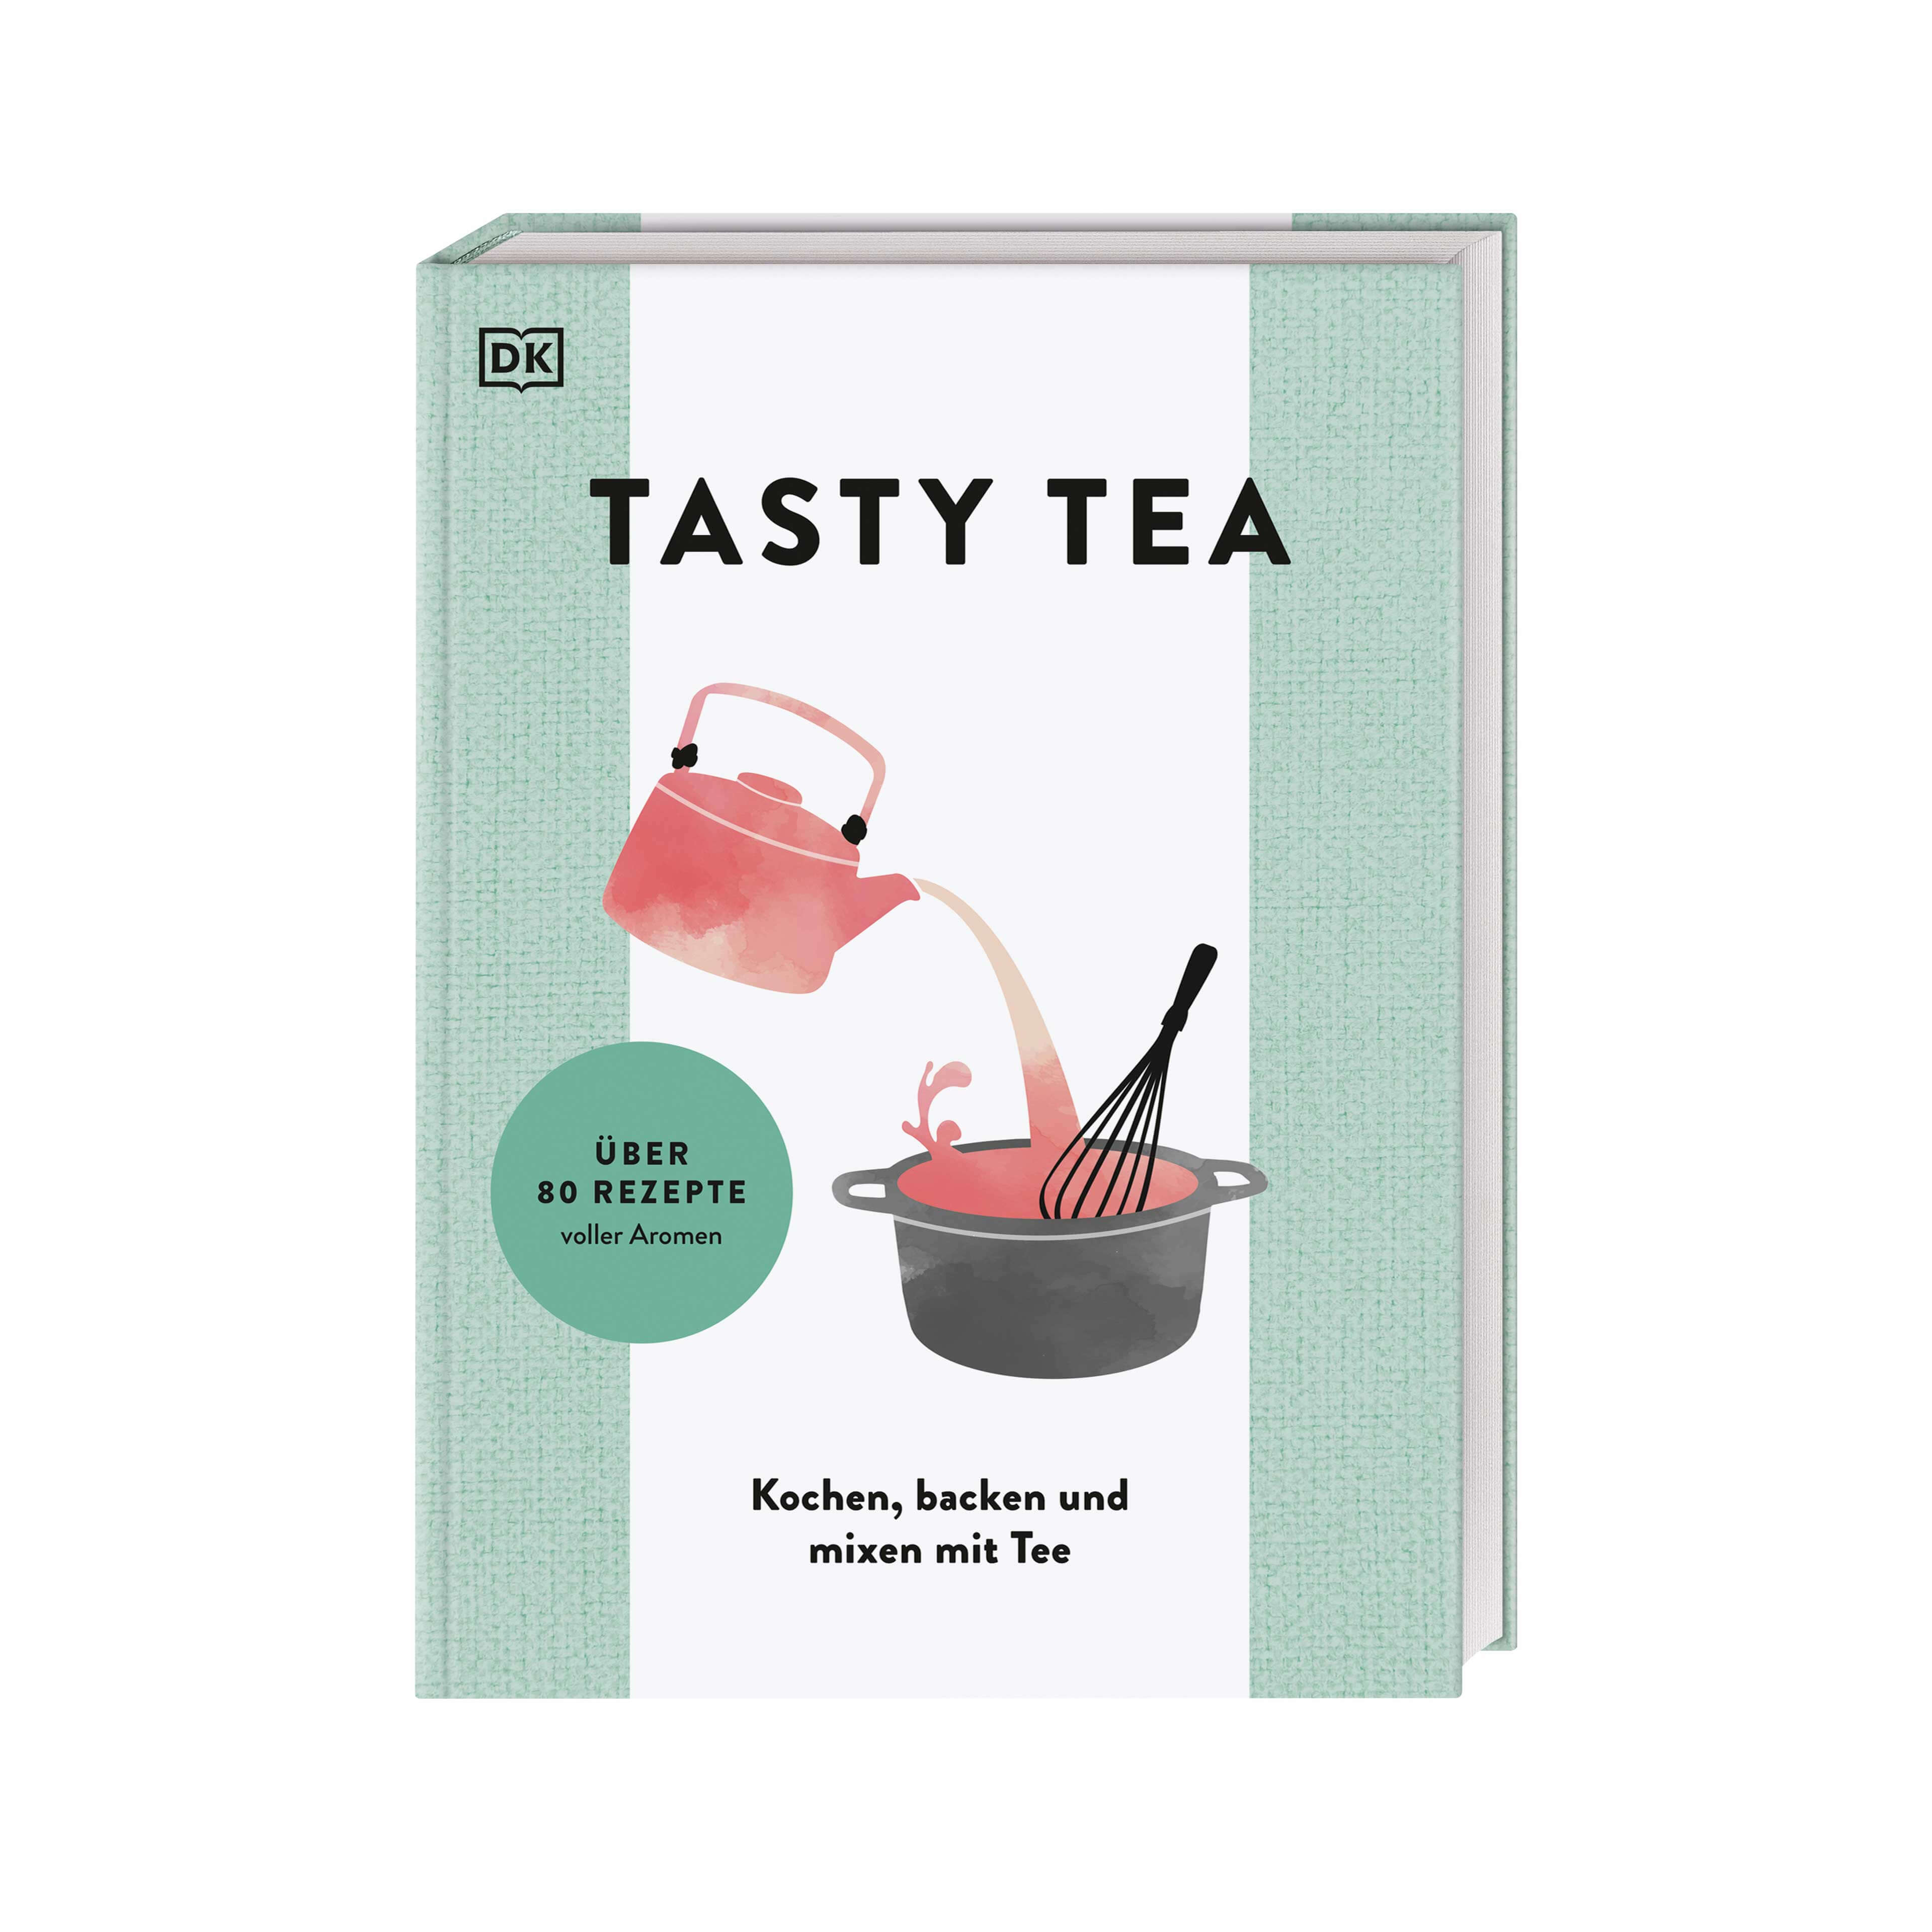 TASTY TEA - Das Teekochbuch